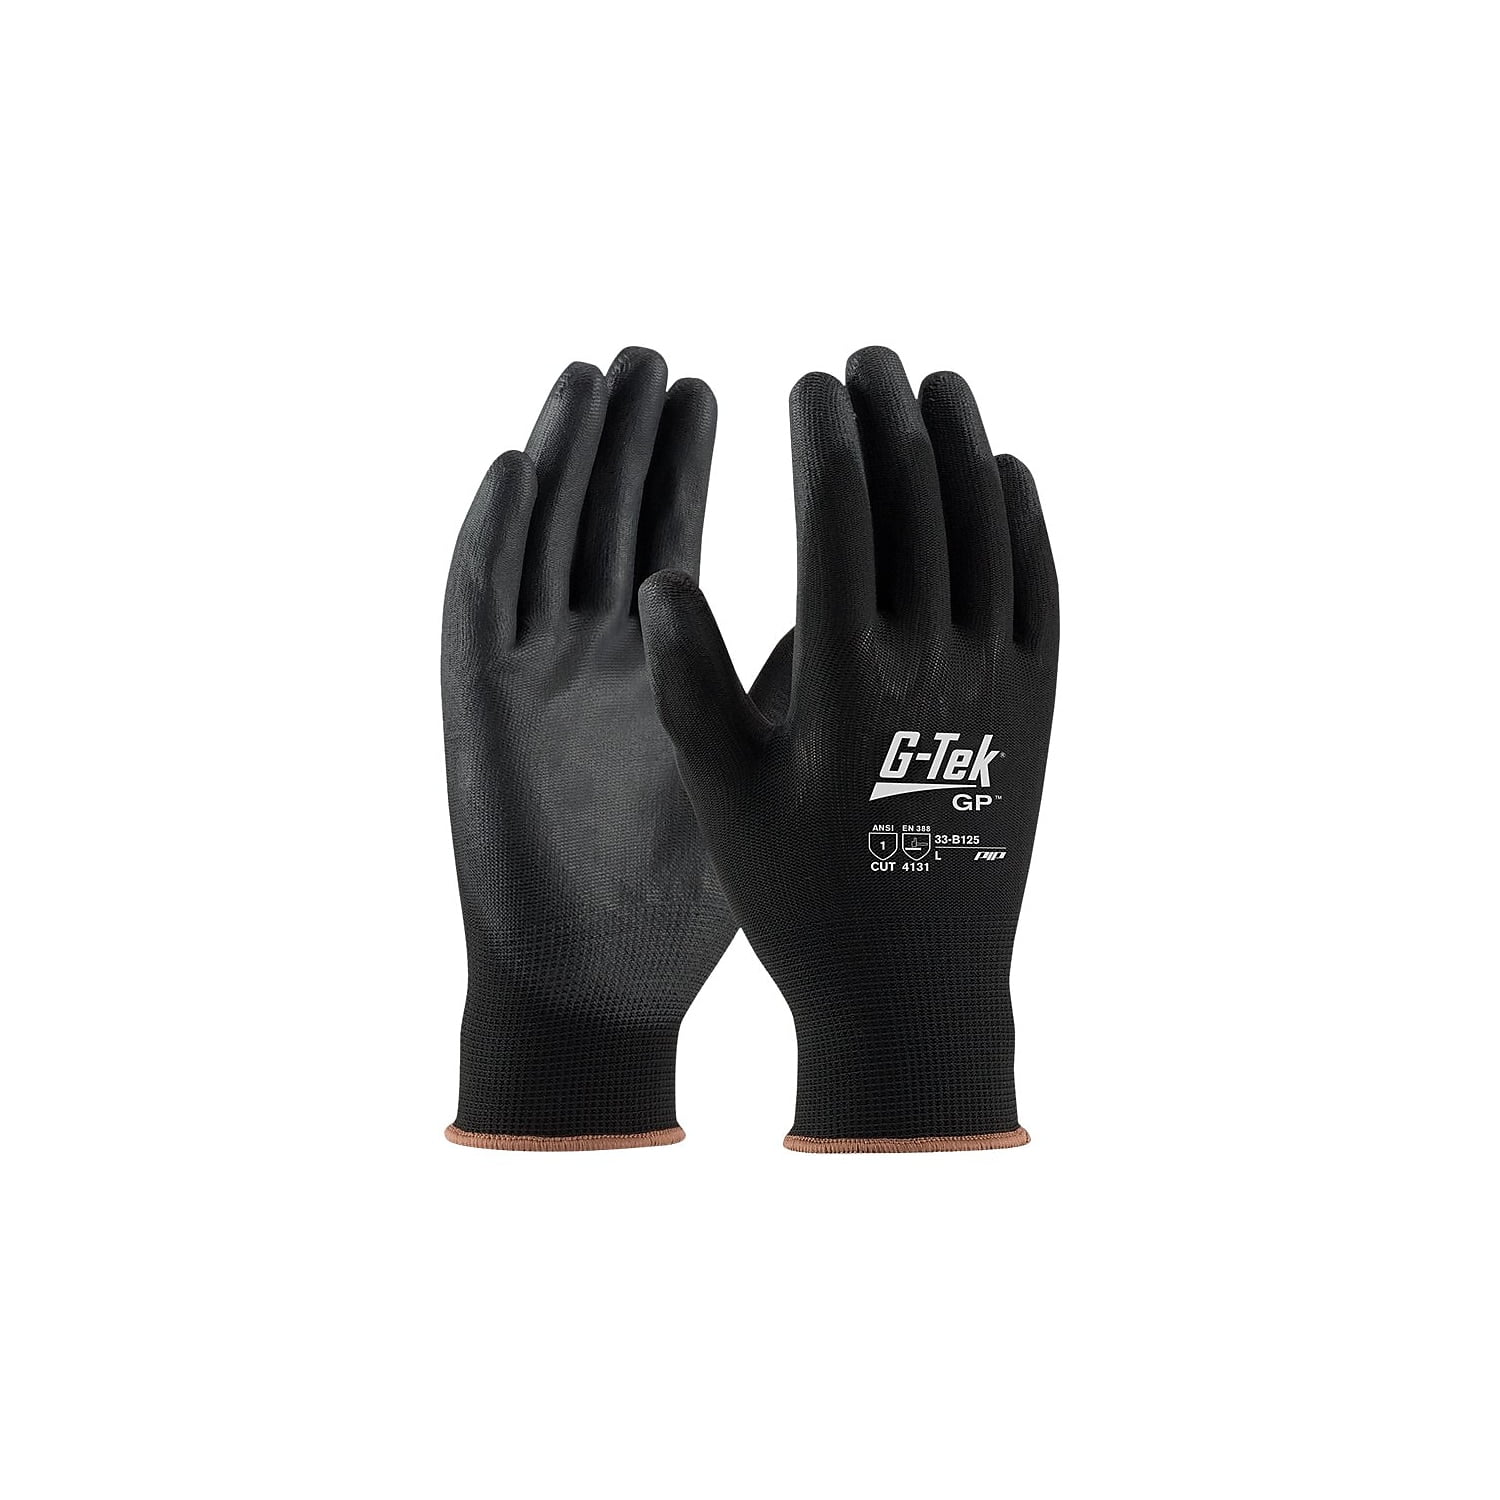 Maxiflex Ultimate Nitrile Coated Gloves Dozen XLG 